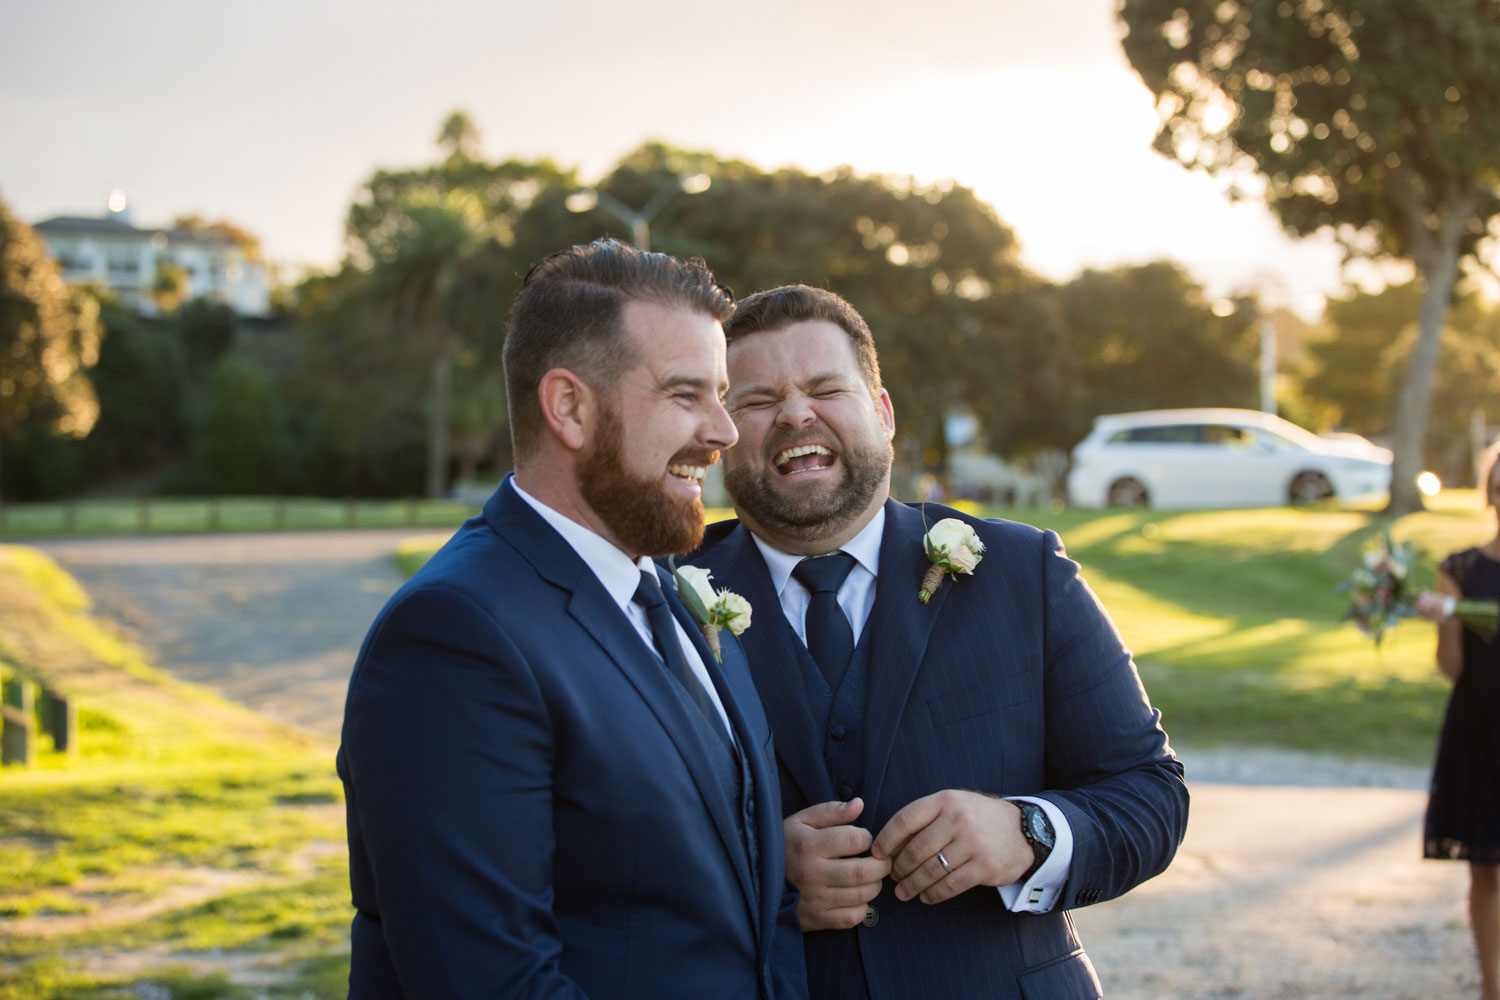 wedding photographer auckland groom and best man having a laugh